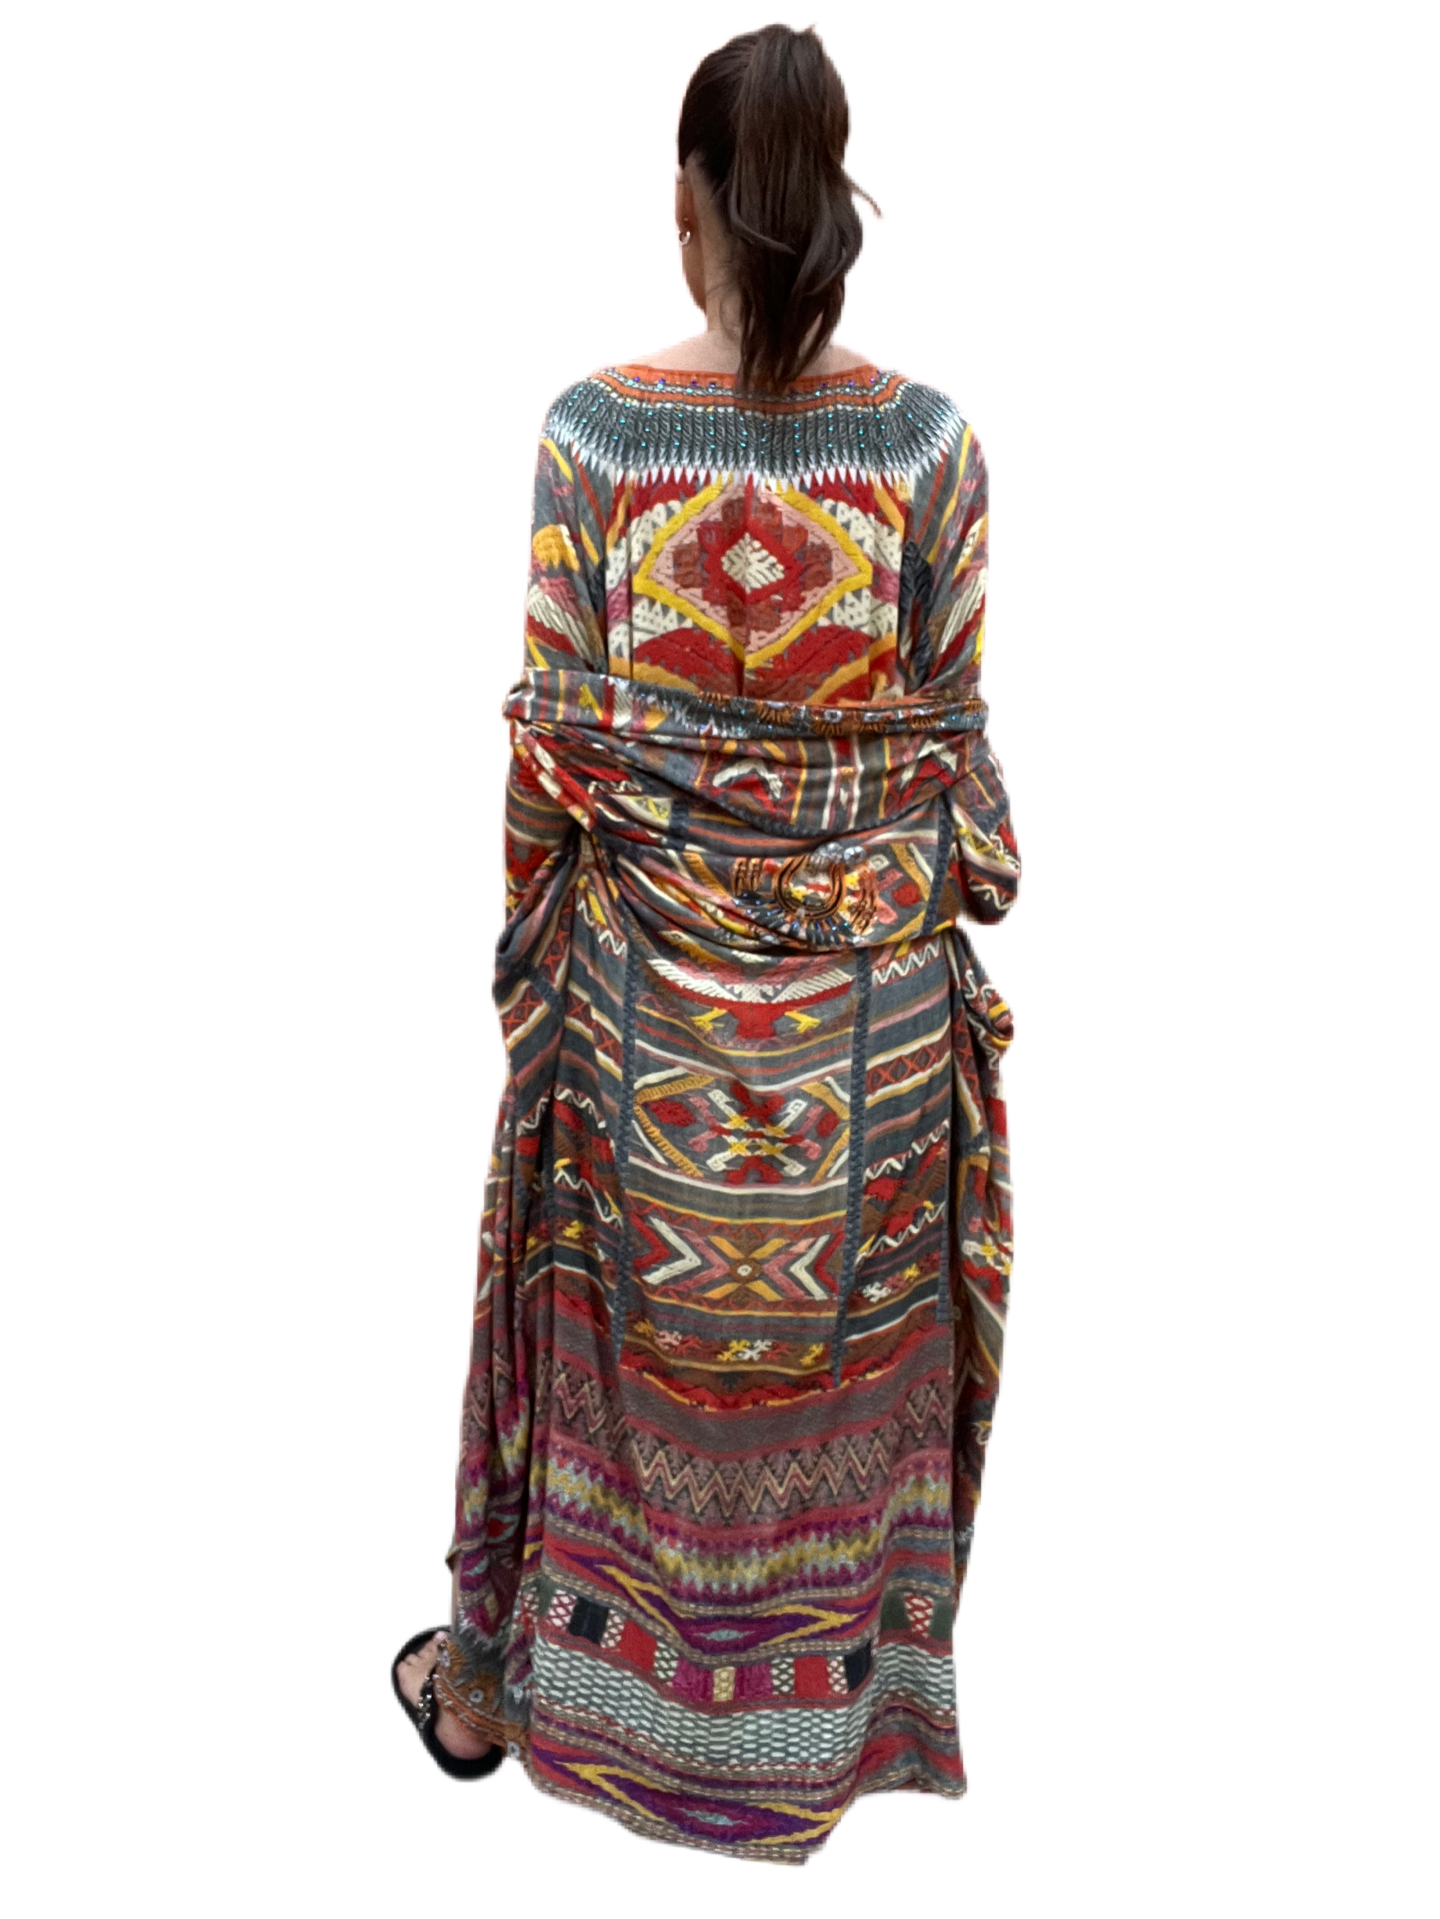 Camilla Multicolour Aztec Print Dress & Jacket. One Size.